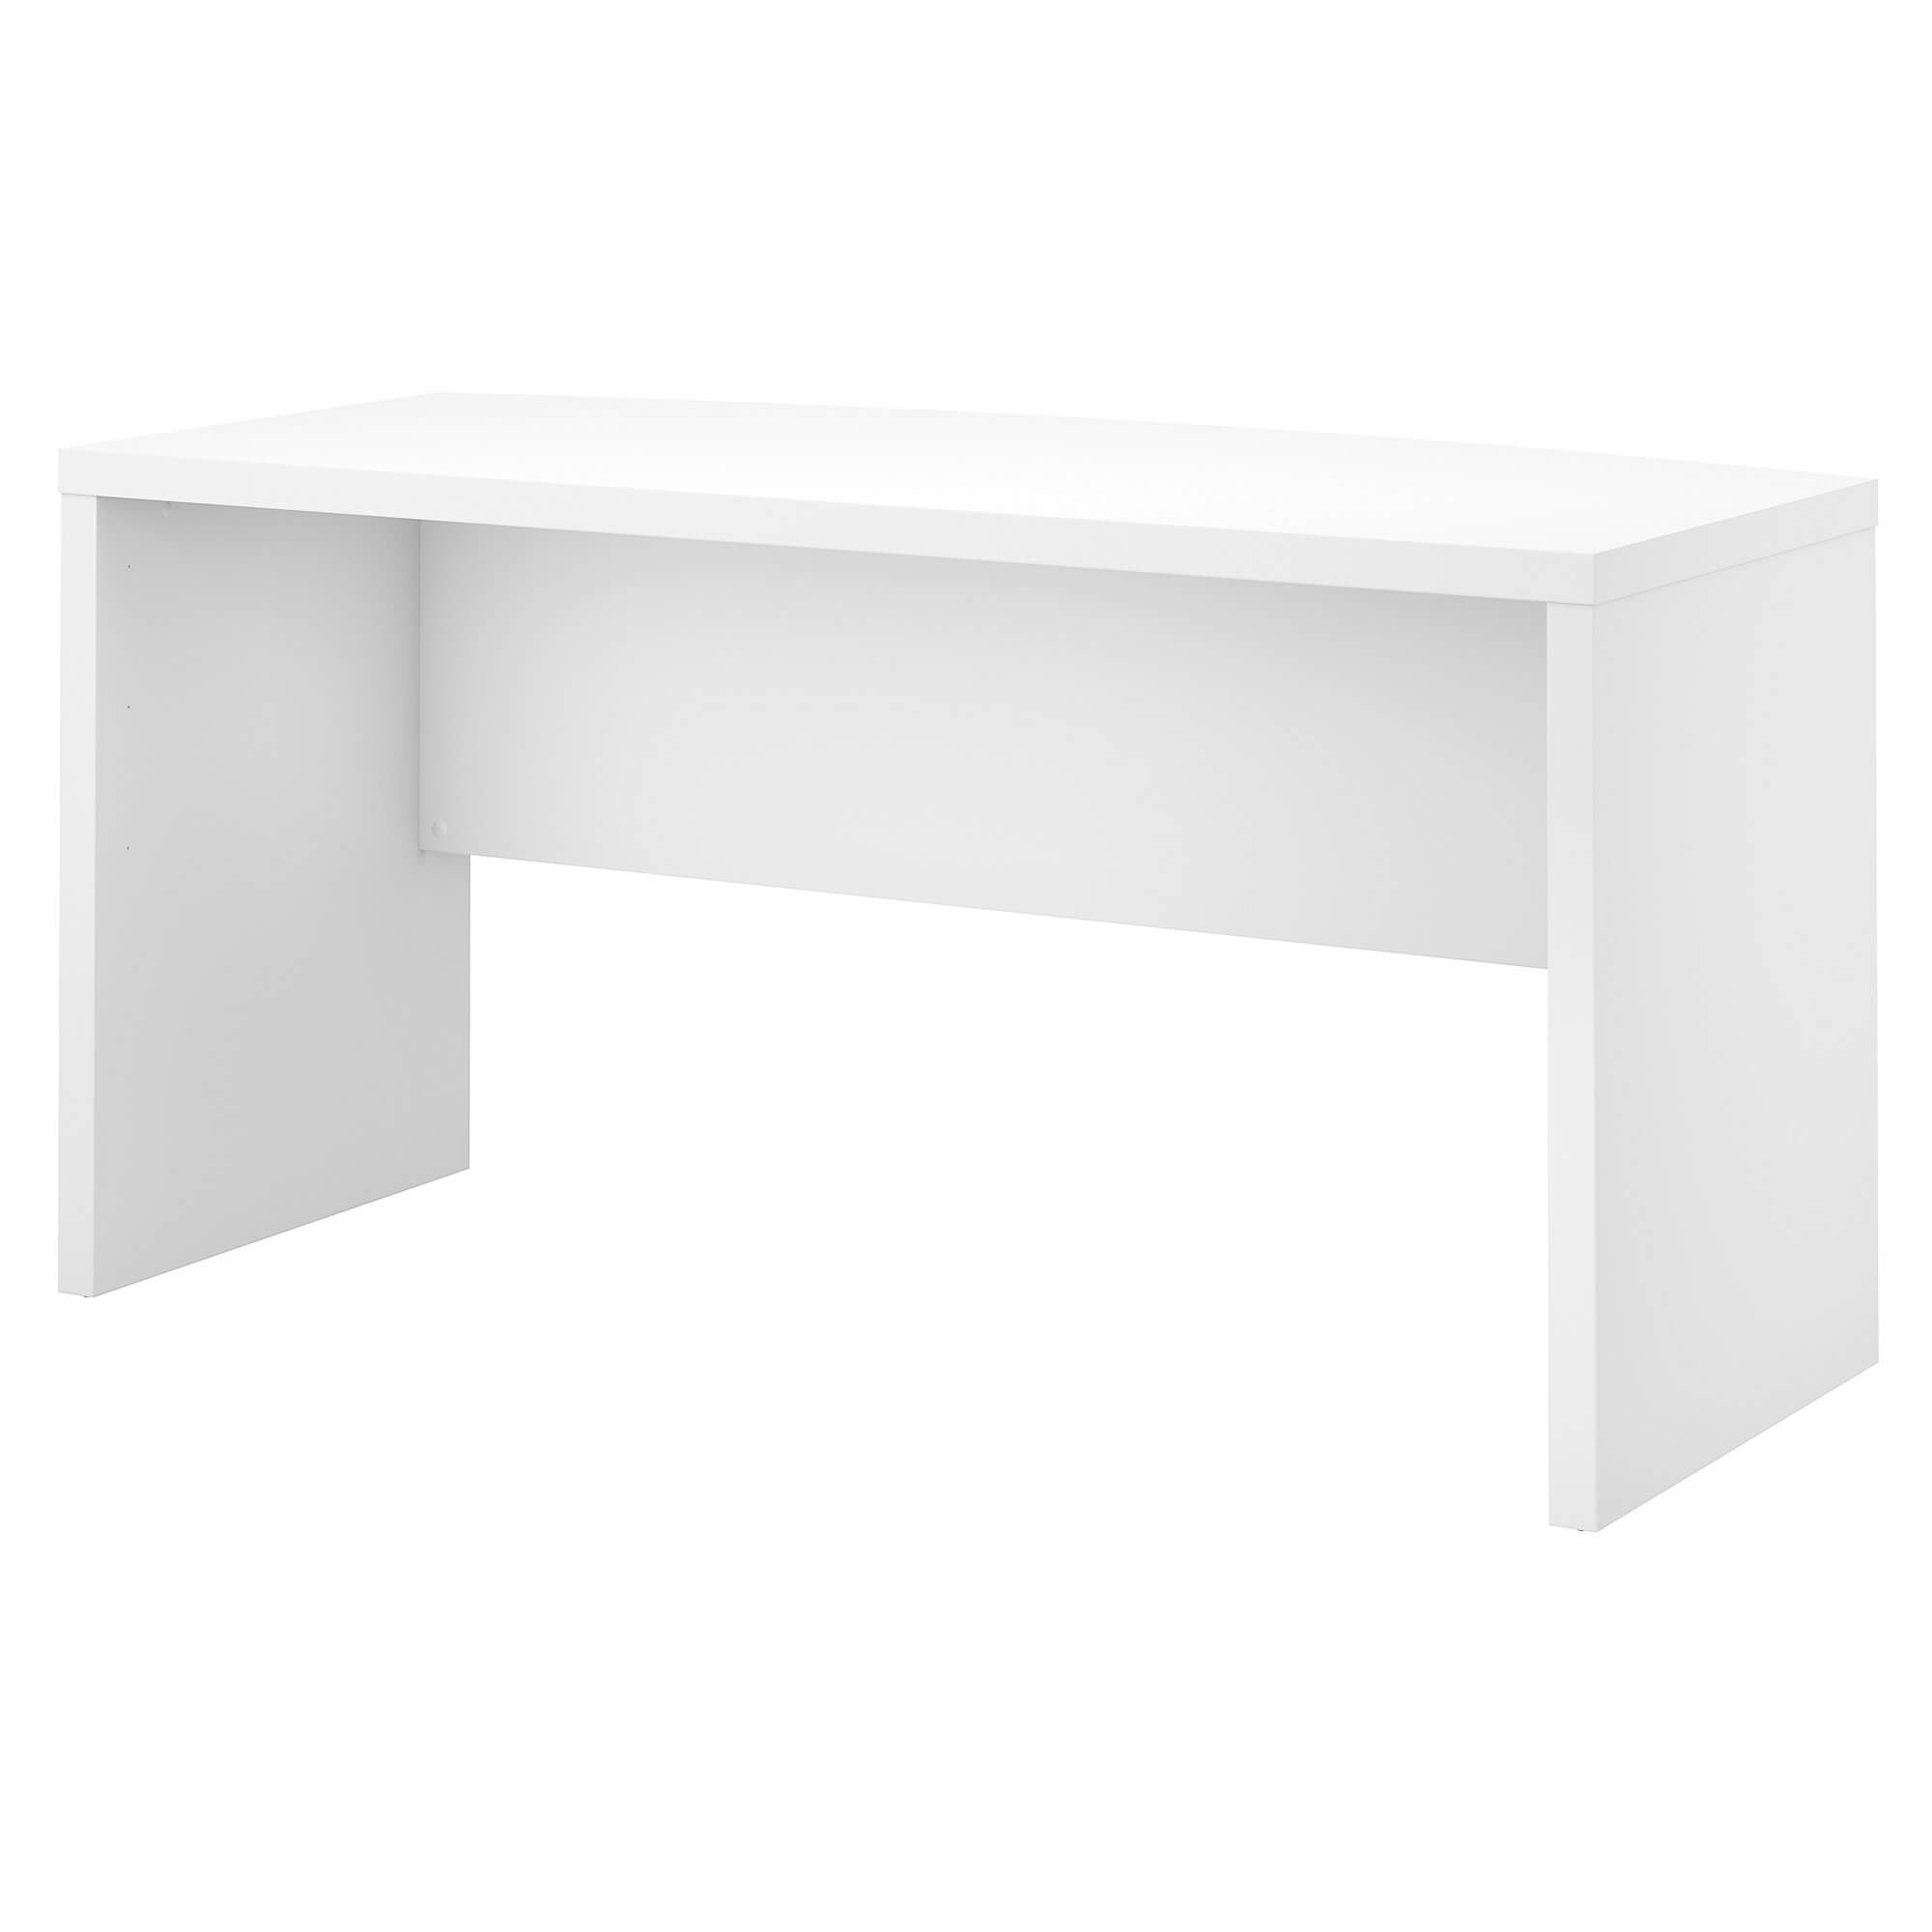 Affordable office furniture desks CUB KI60105 03 FBB